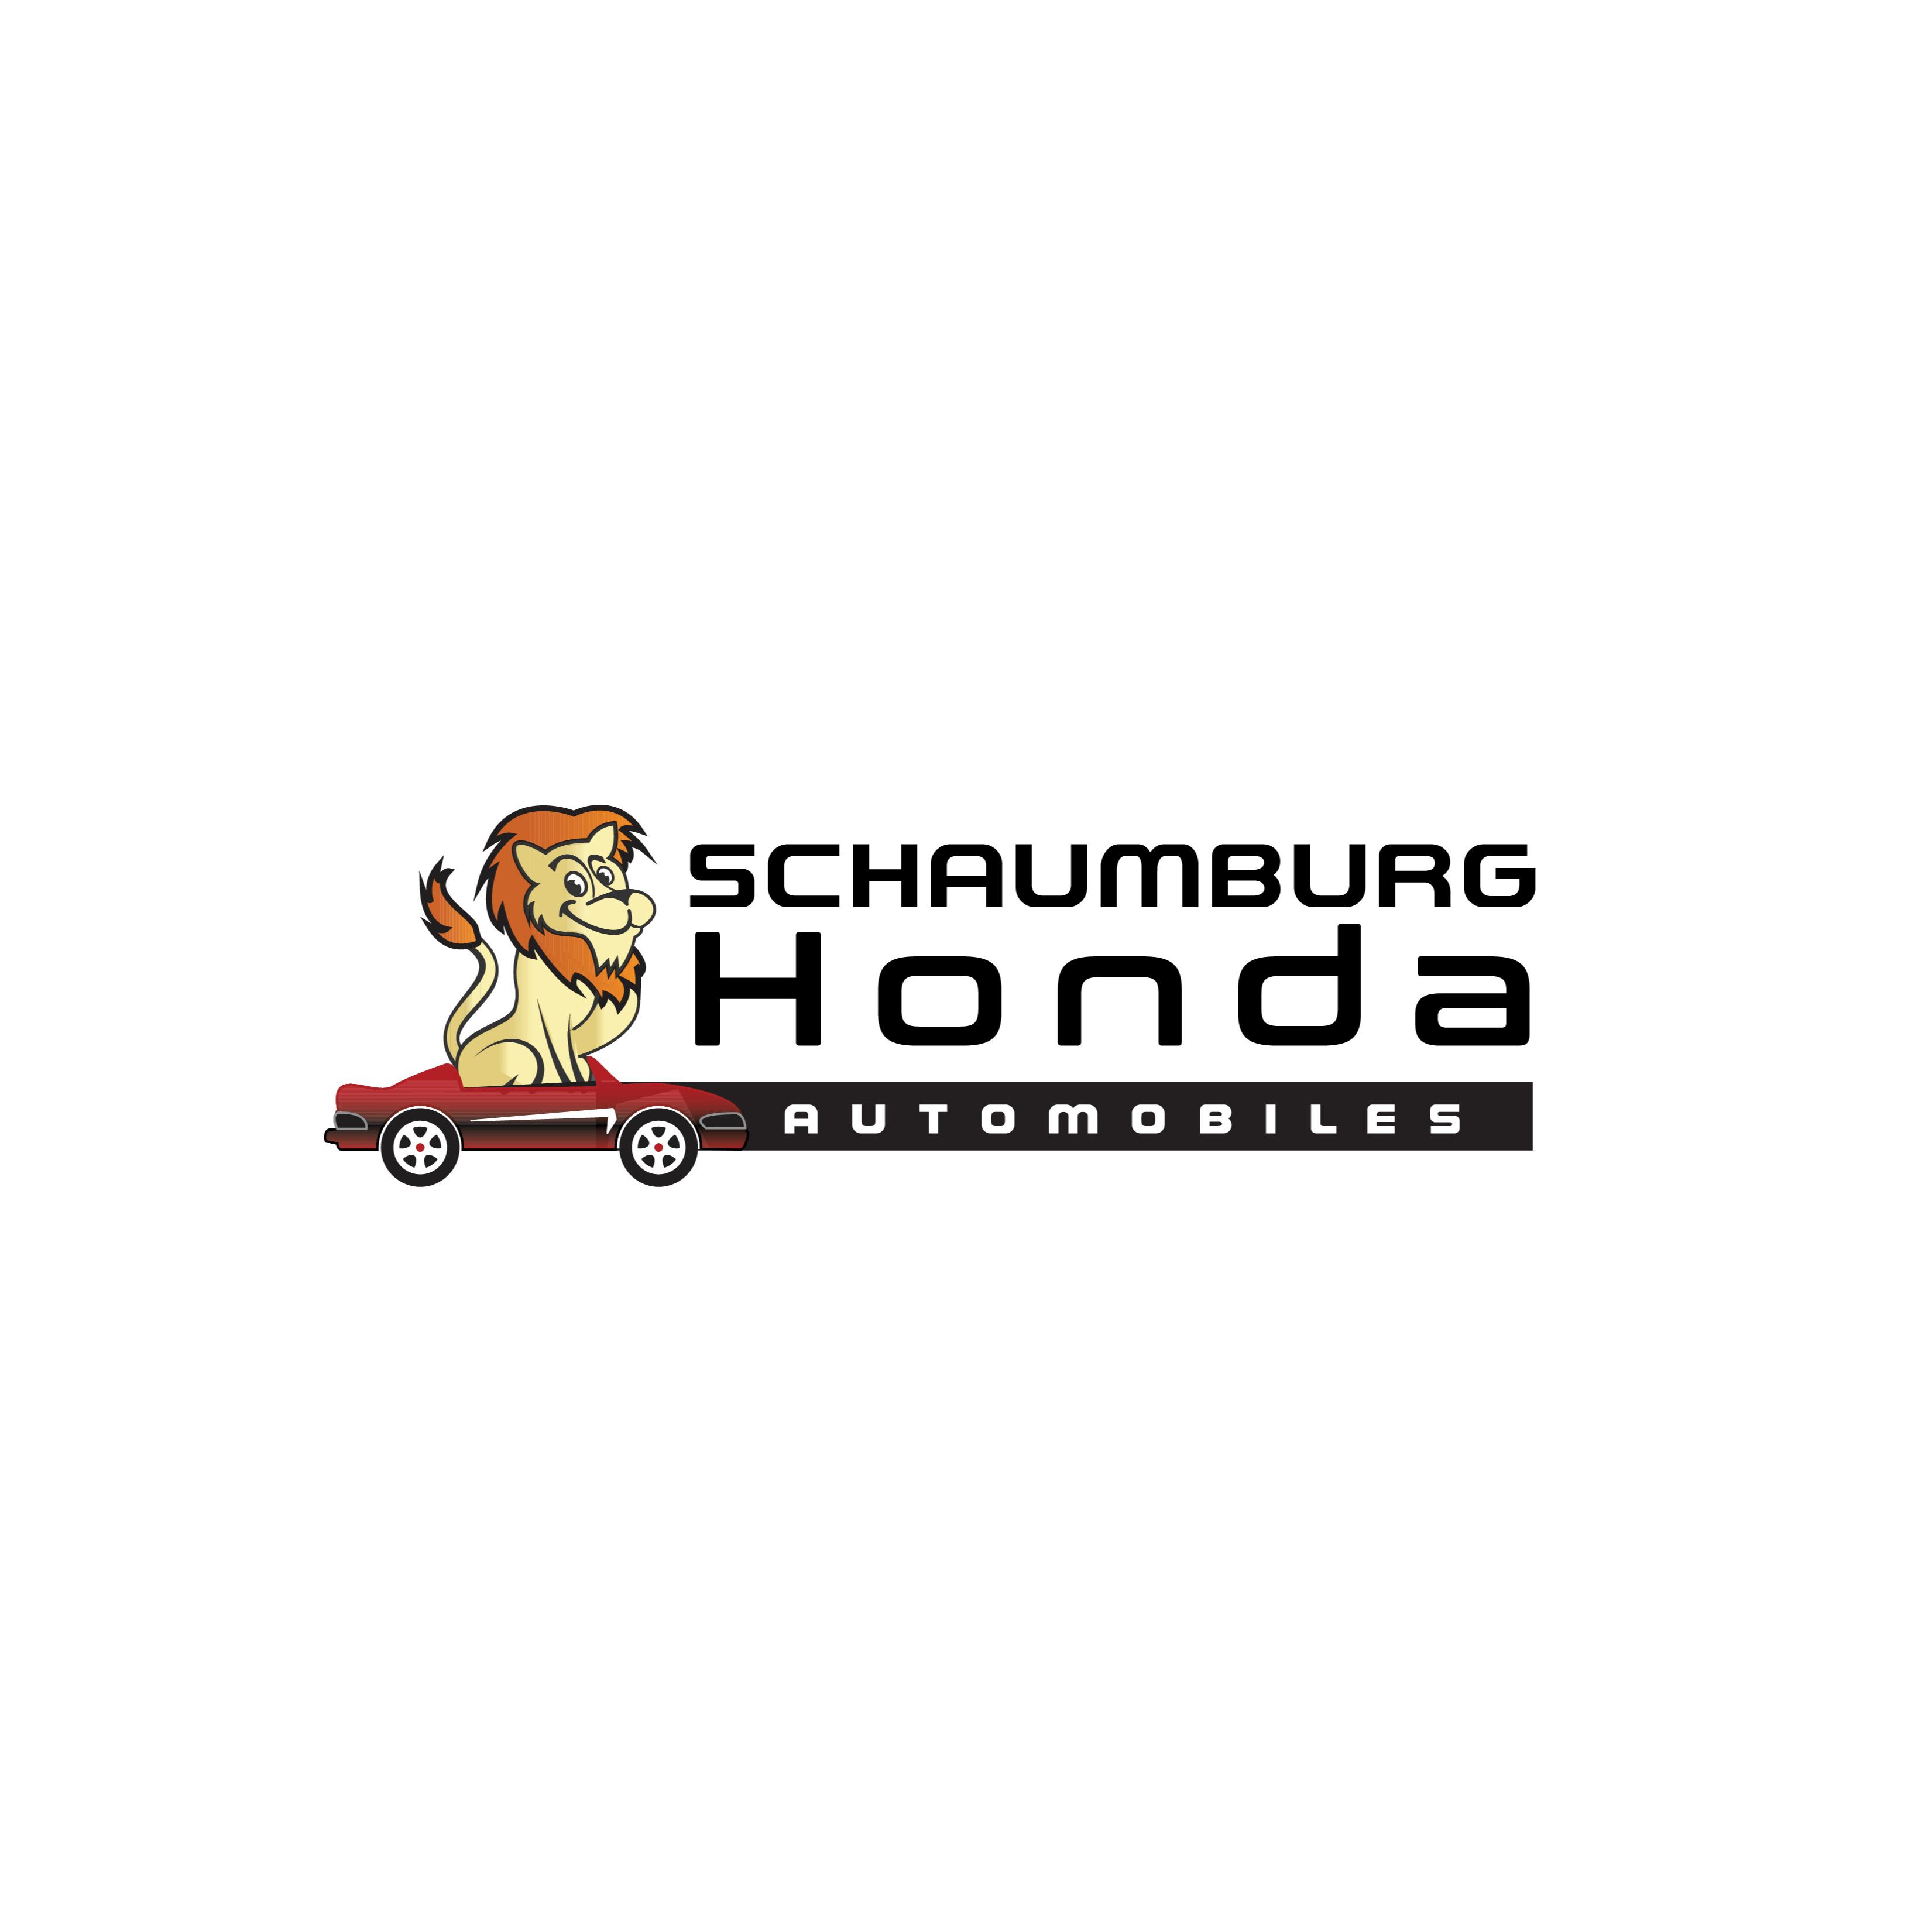 Schaumburg Honda Automobiles - Schaumburg, IL 60173 - (847)884-6632 | ShowMeLocal.com